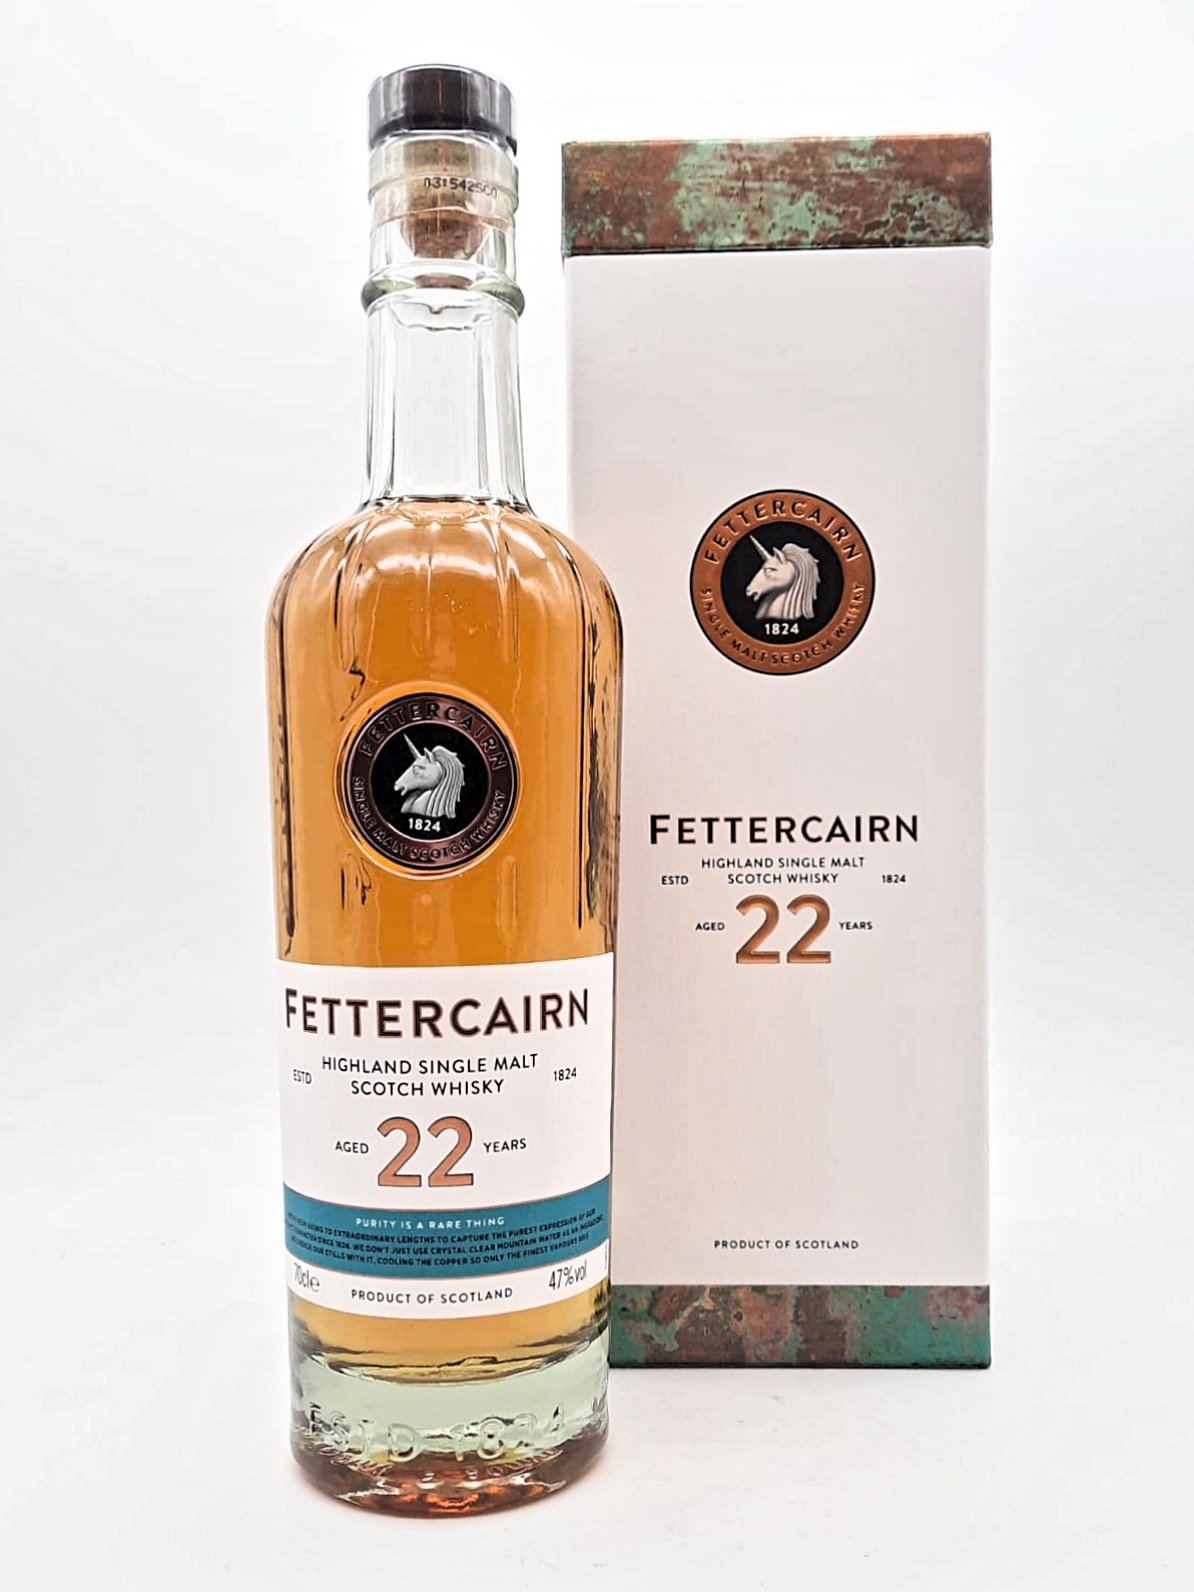 Fettercairn s2 Jahre Highland Single Malt Scotch Whisky